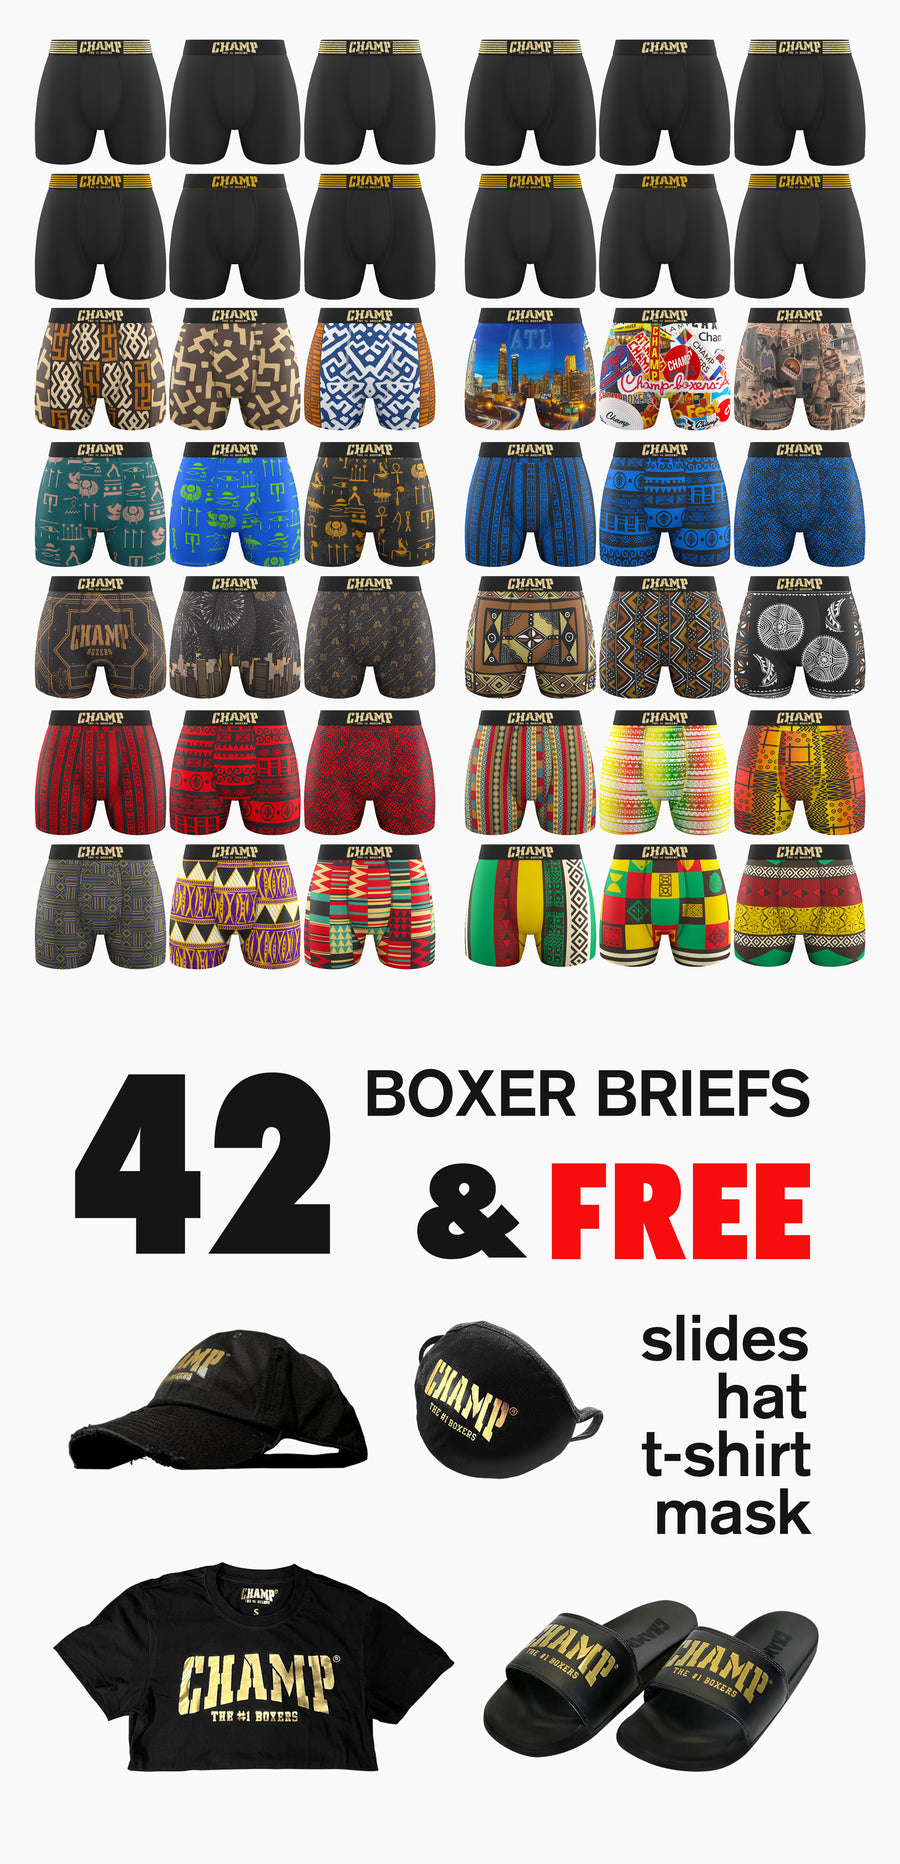 42 BOXER BRIEFS - PLUS FREE SLIDES, FREE HAT, FREE T-SHIRT, FREE MASK